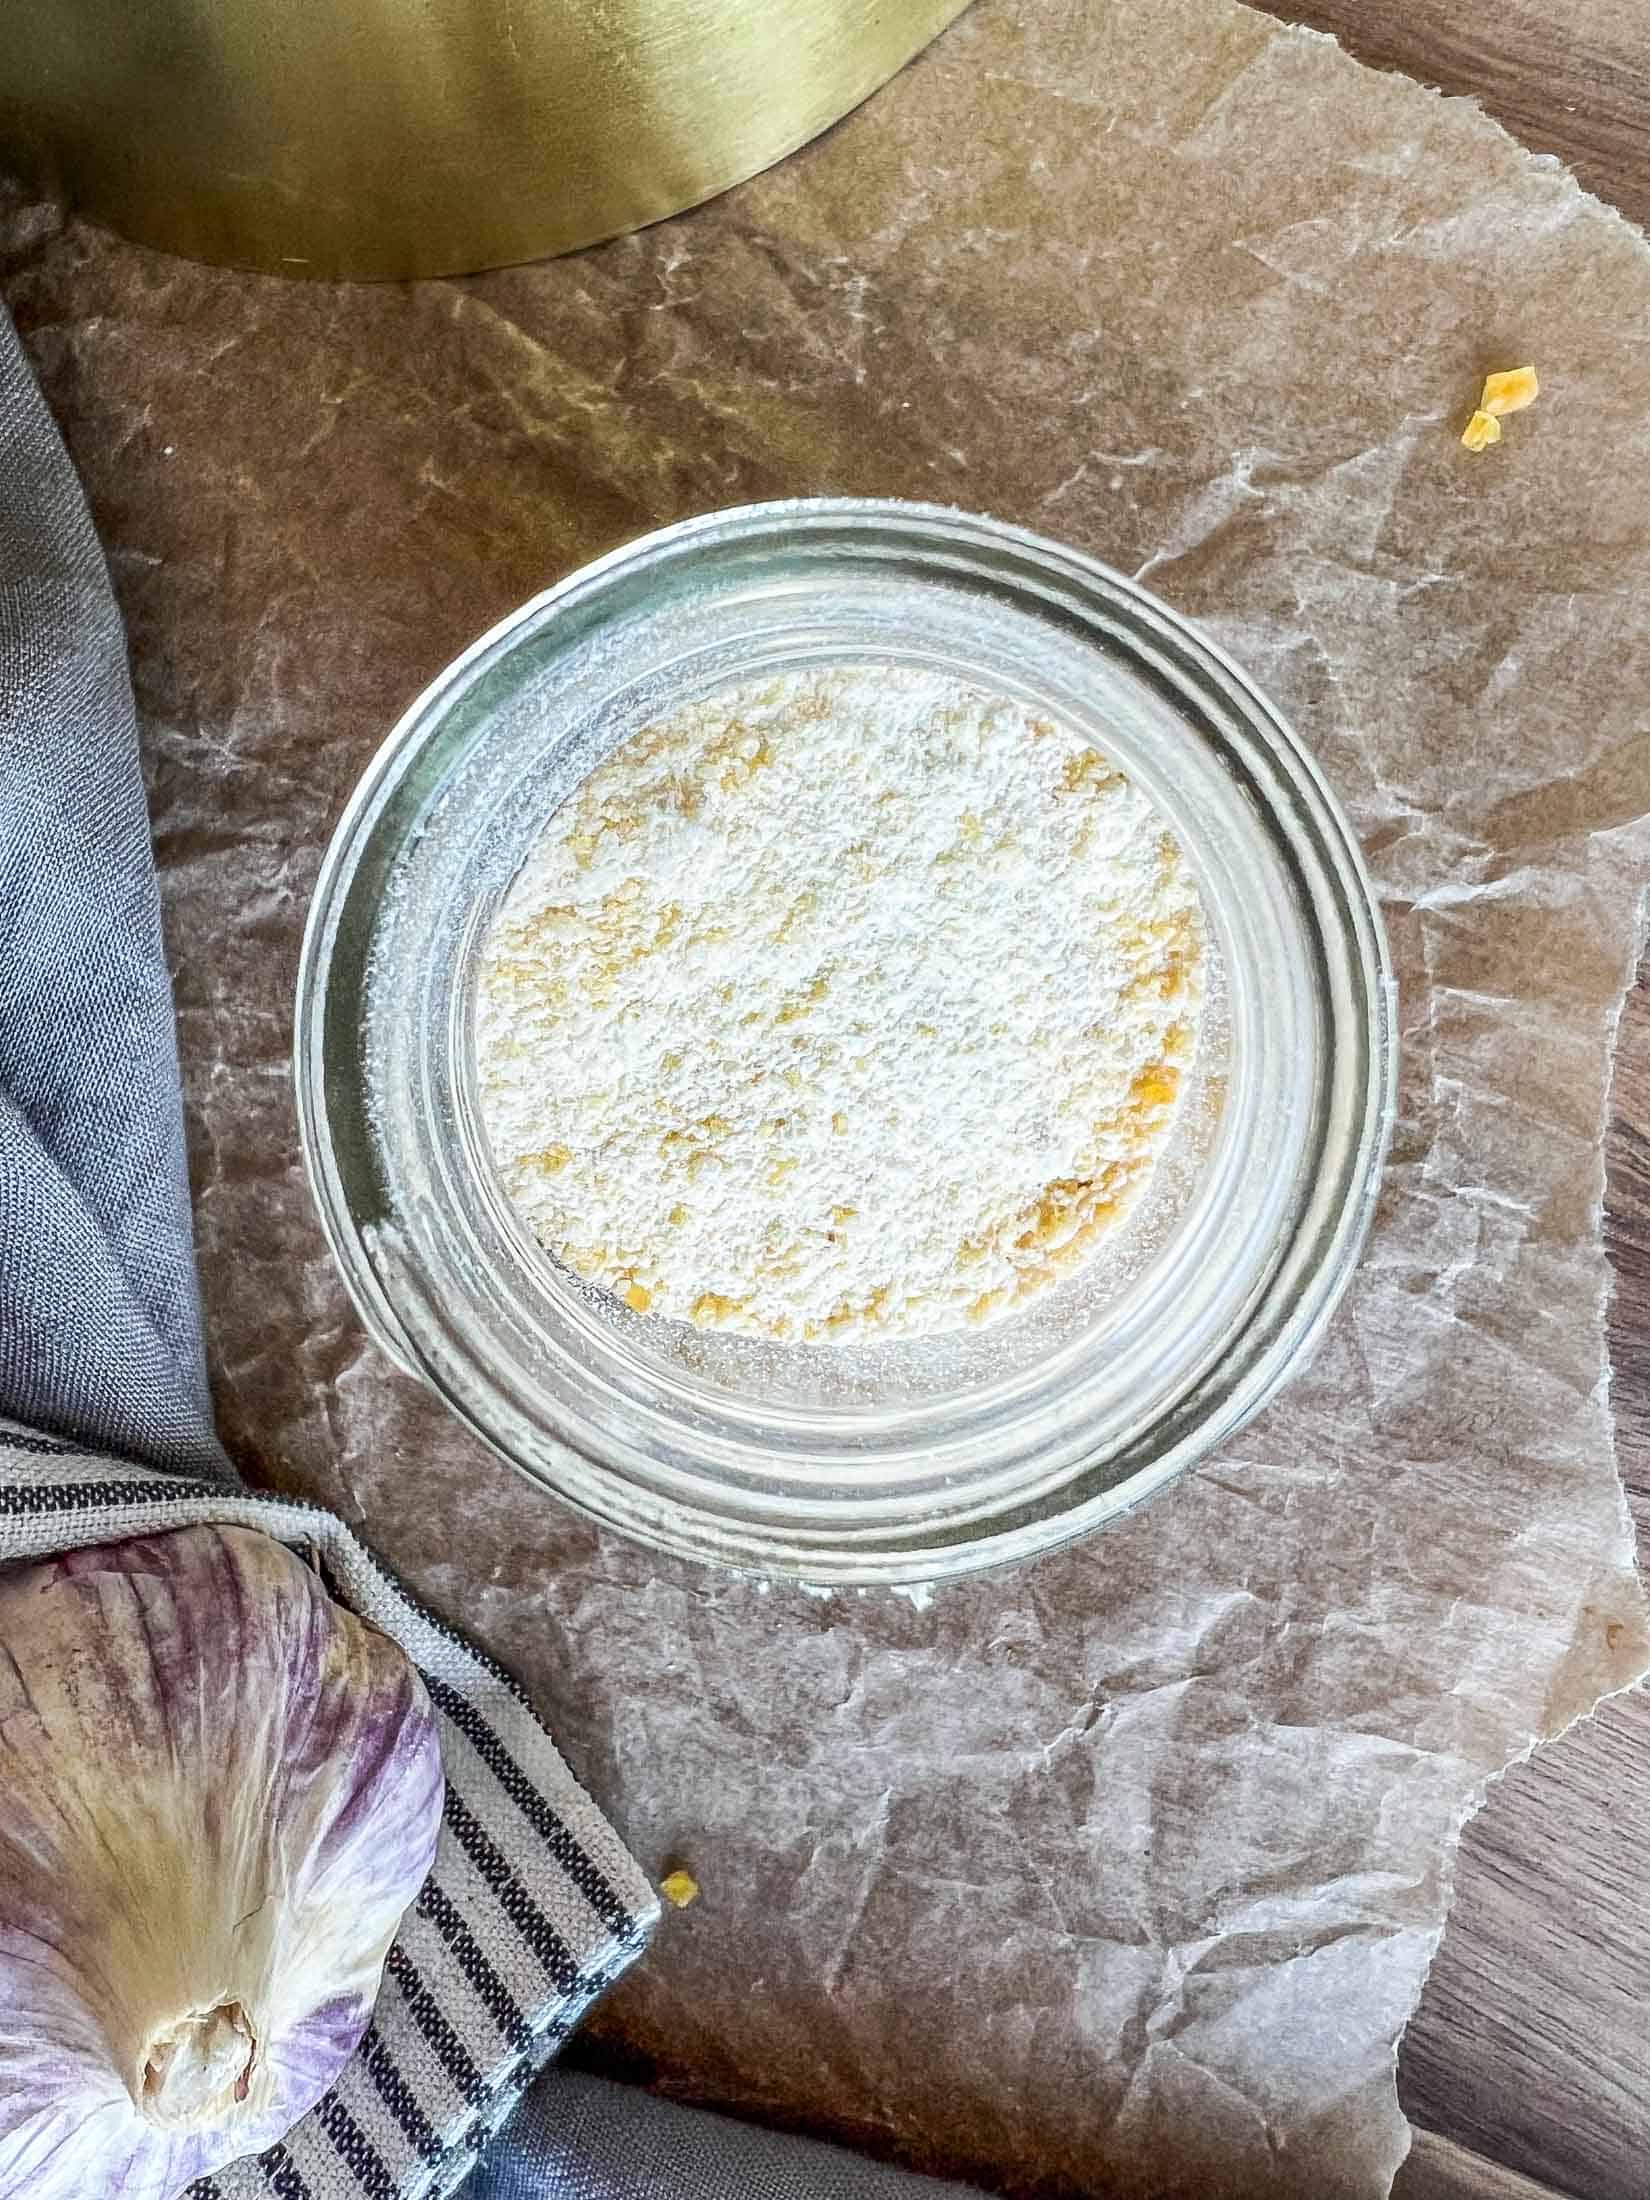 Homemade dried garlic powder in a glass spice jar.